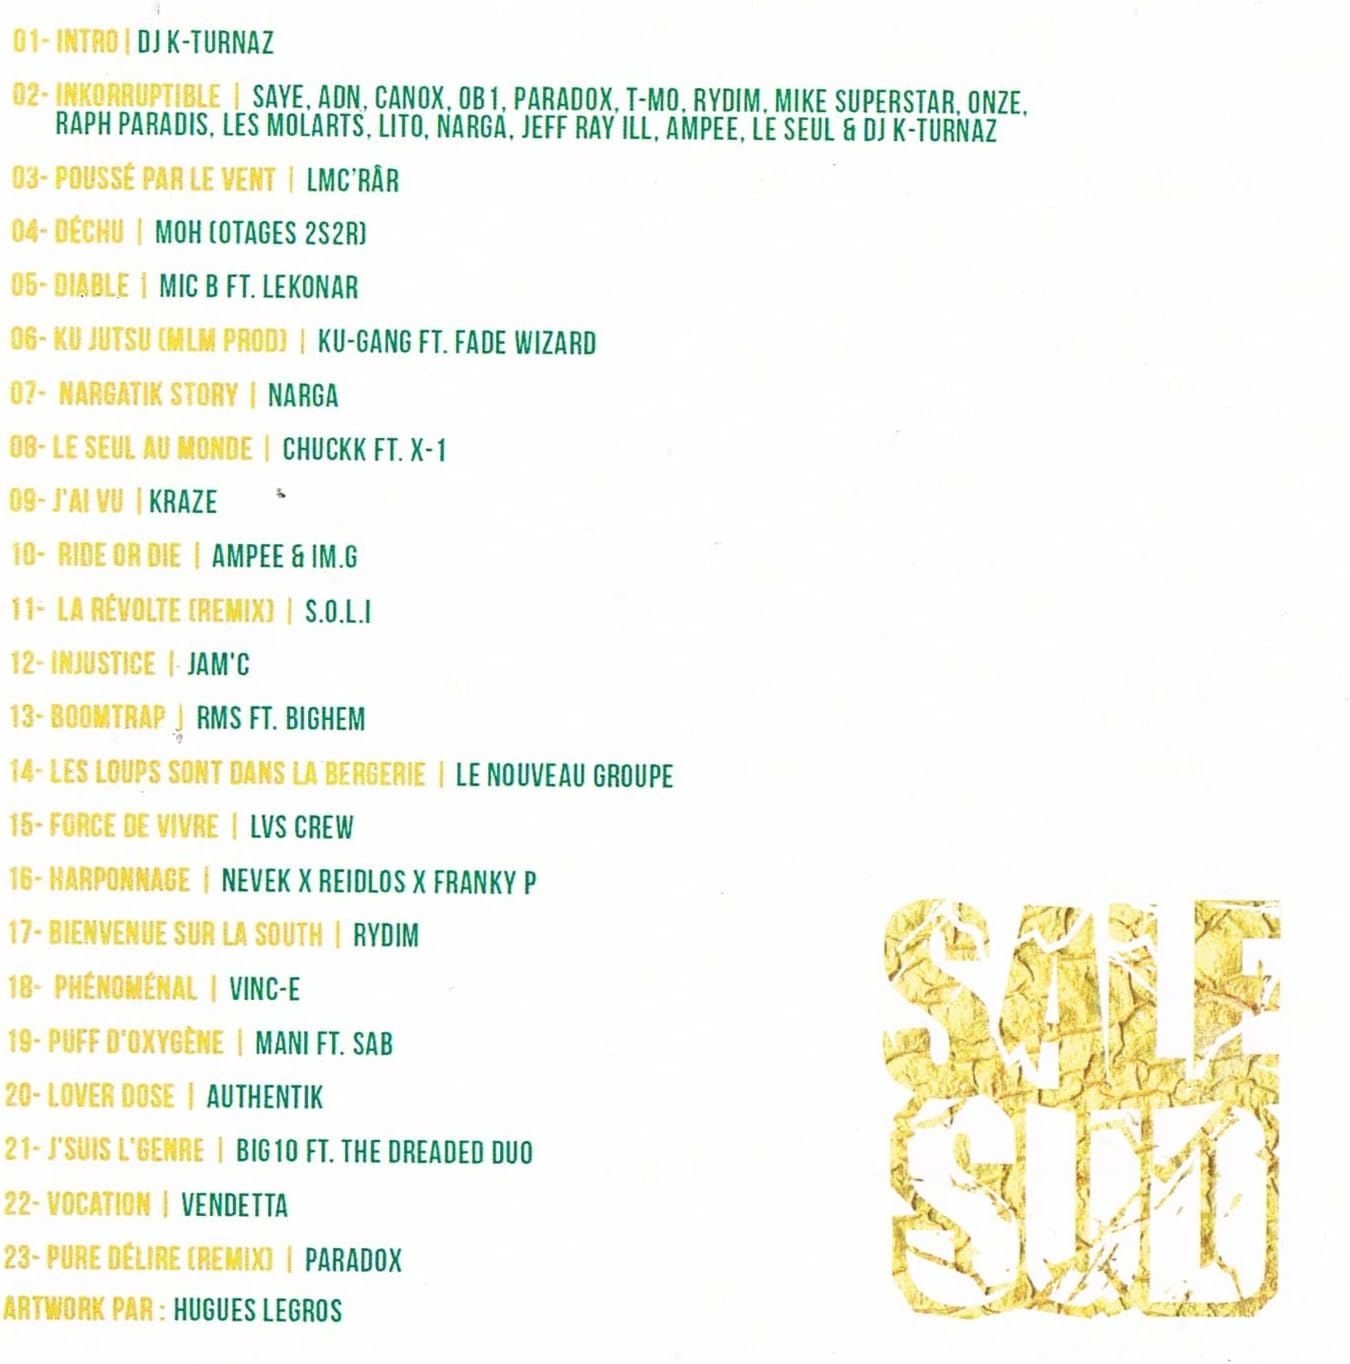 Sale Sud Présente Quebec South Side [audioCD] DJ K-Turnaz, LMC Rar, MOH, Mic B ft. Lekonar, Ku-Gang ft Fade & Plus...